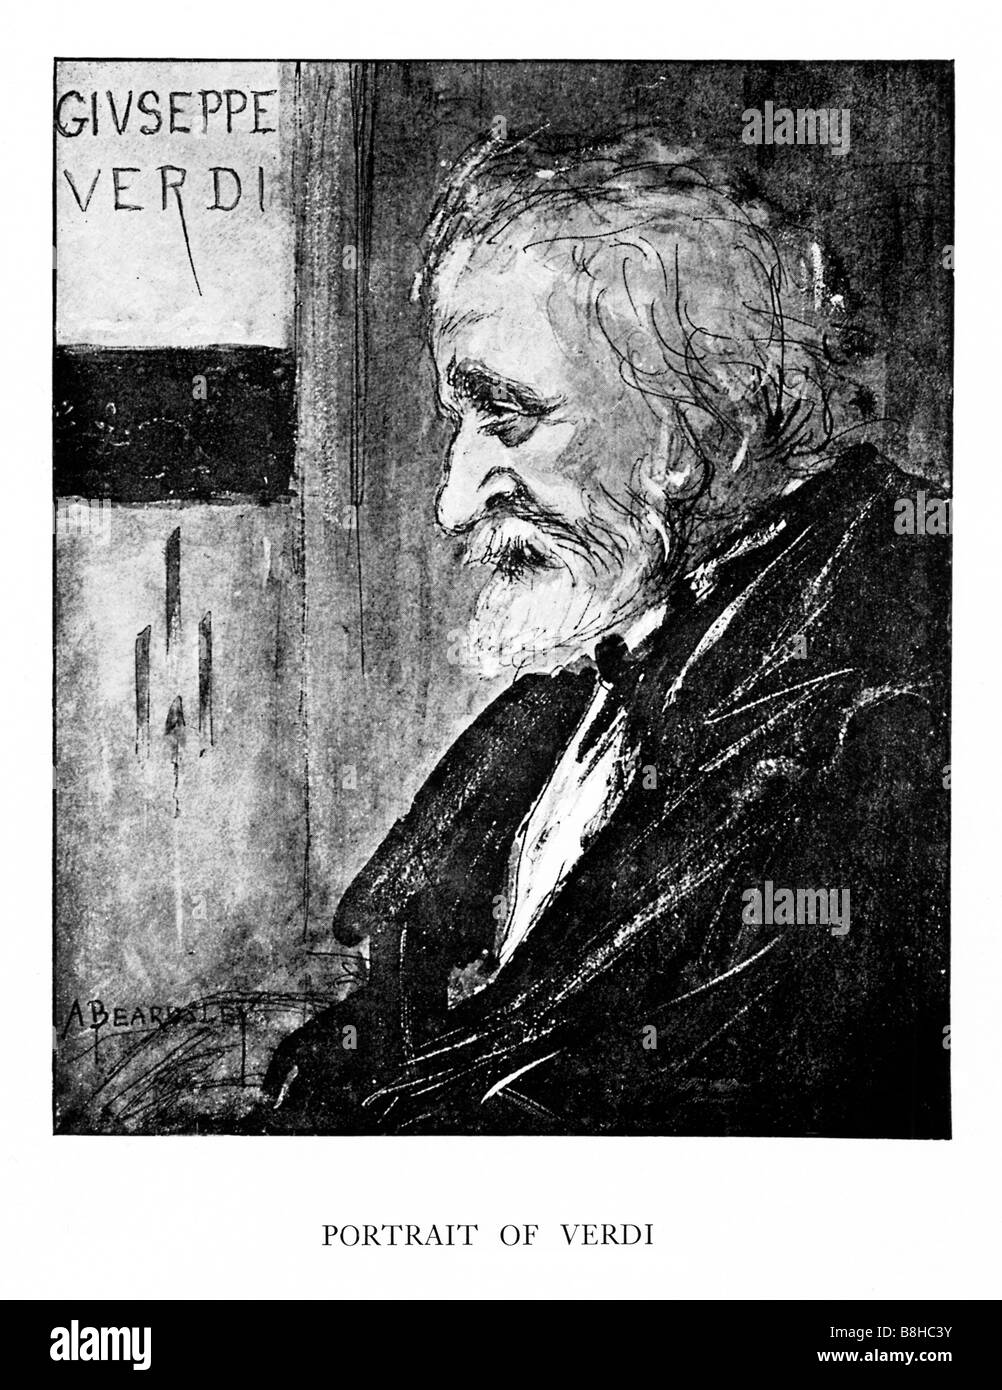 Aubrey Beardsley Guiseppe Verdi portrait of the Italian composer, published in Pall Mall Budget magazine Stock Photo